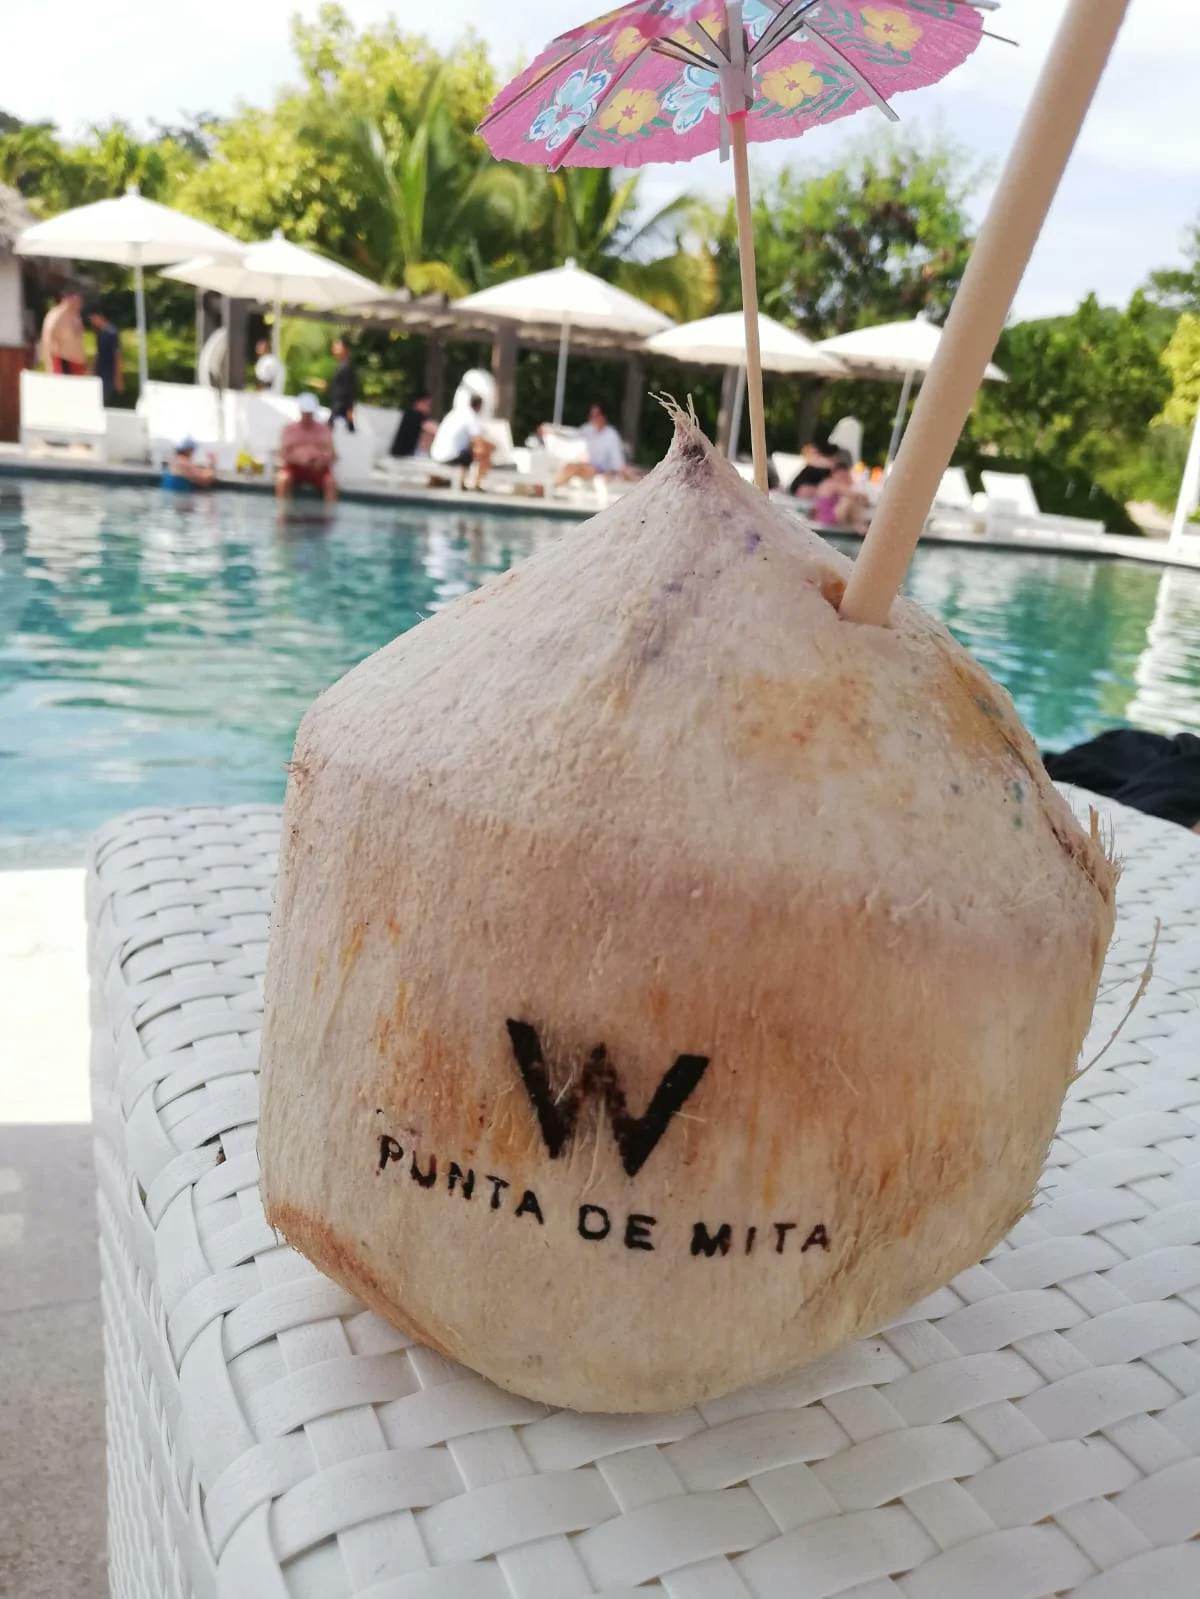 A coconut drink with "W Punta De Mita" Printed on it